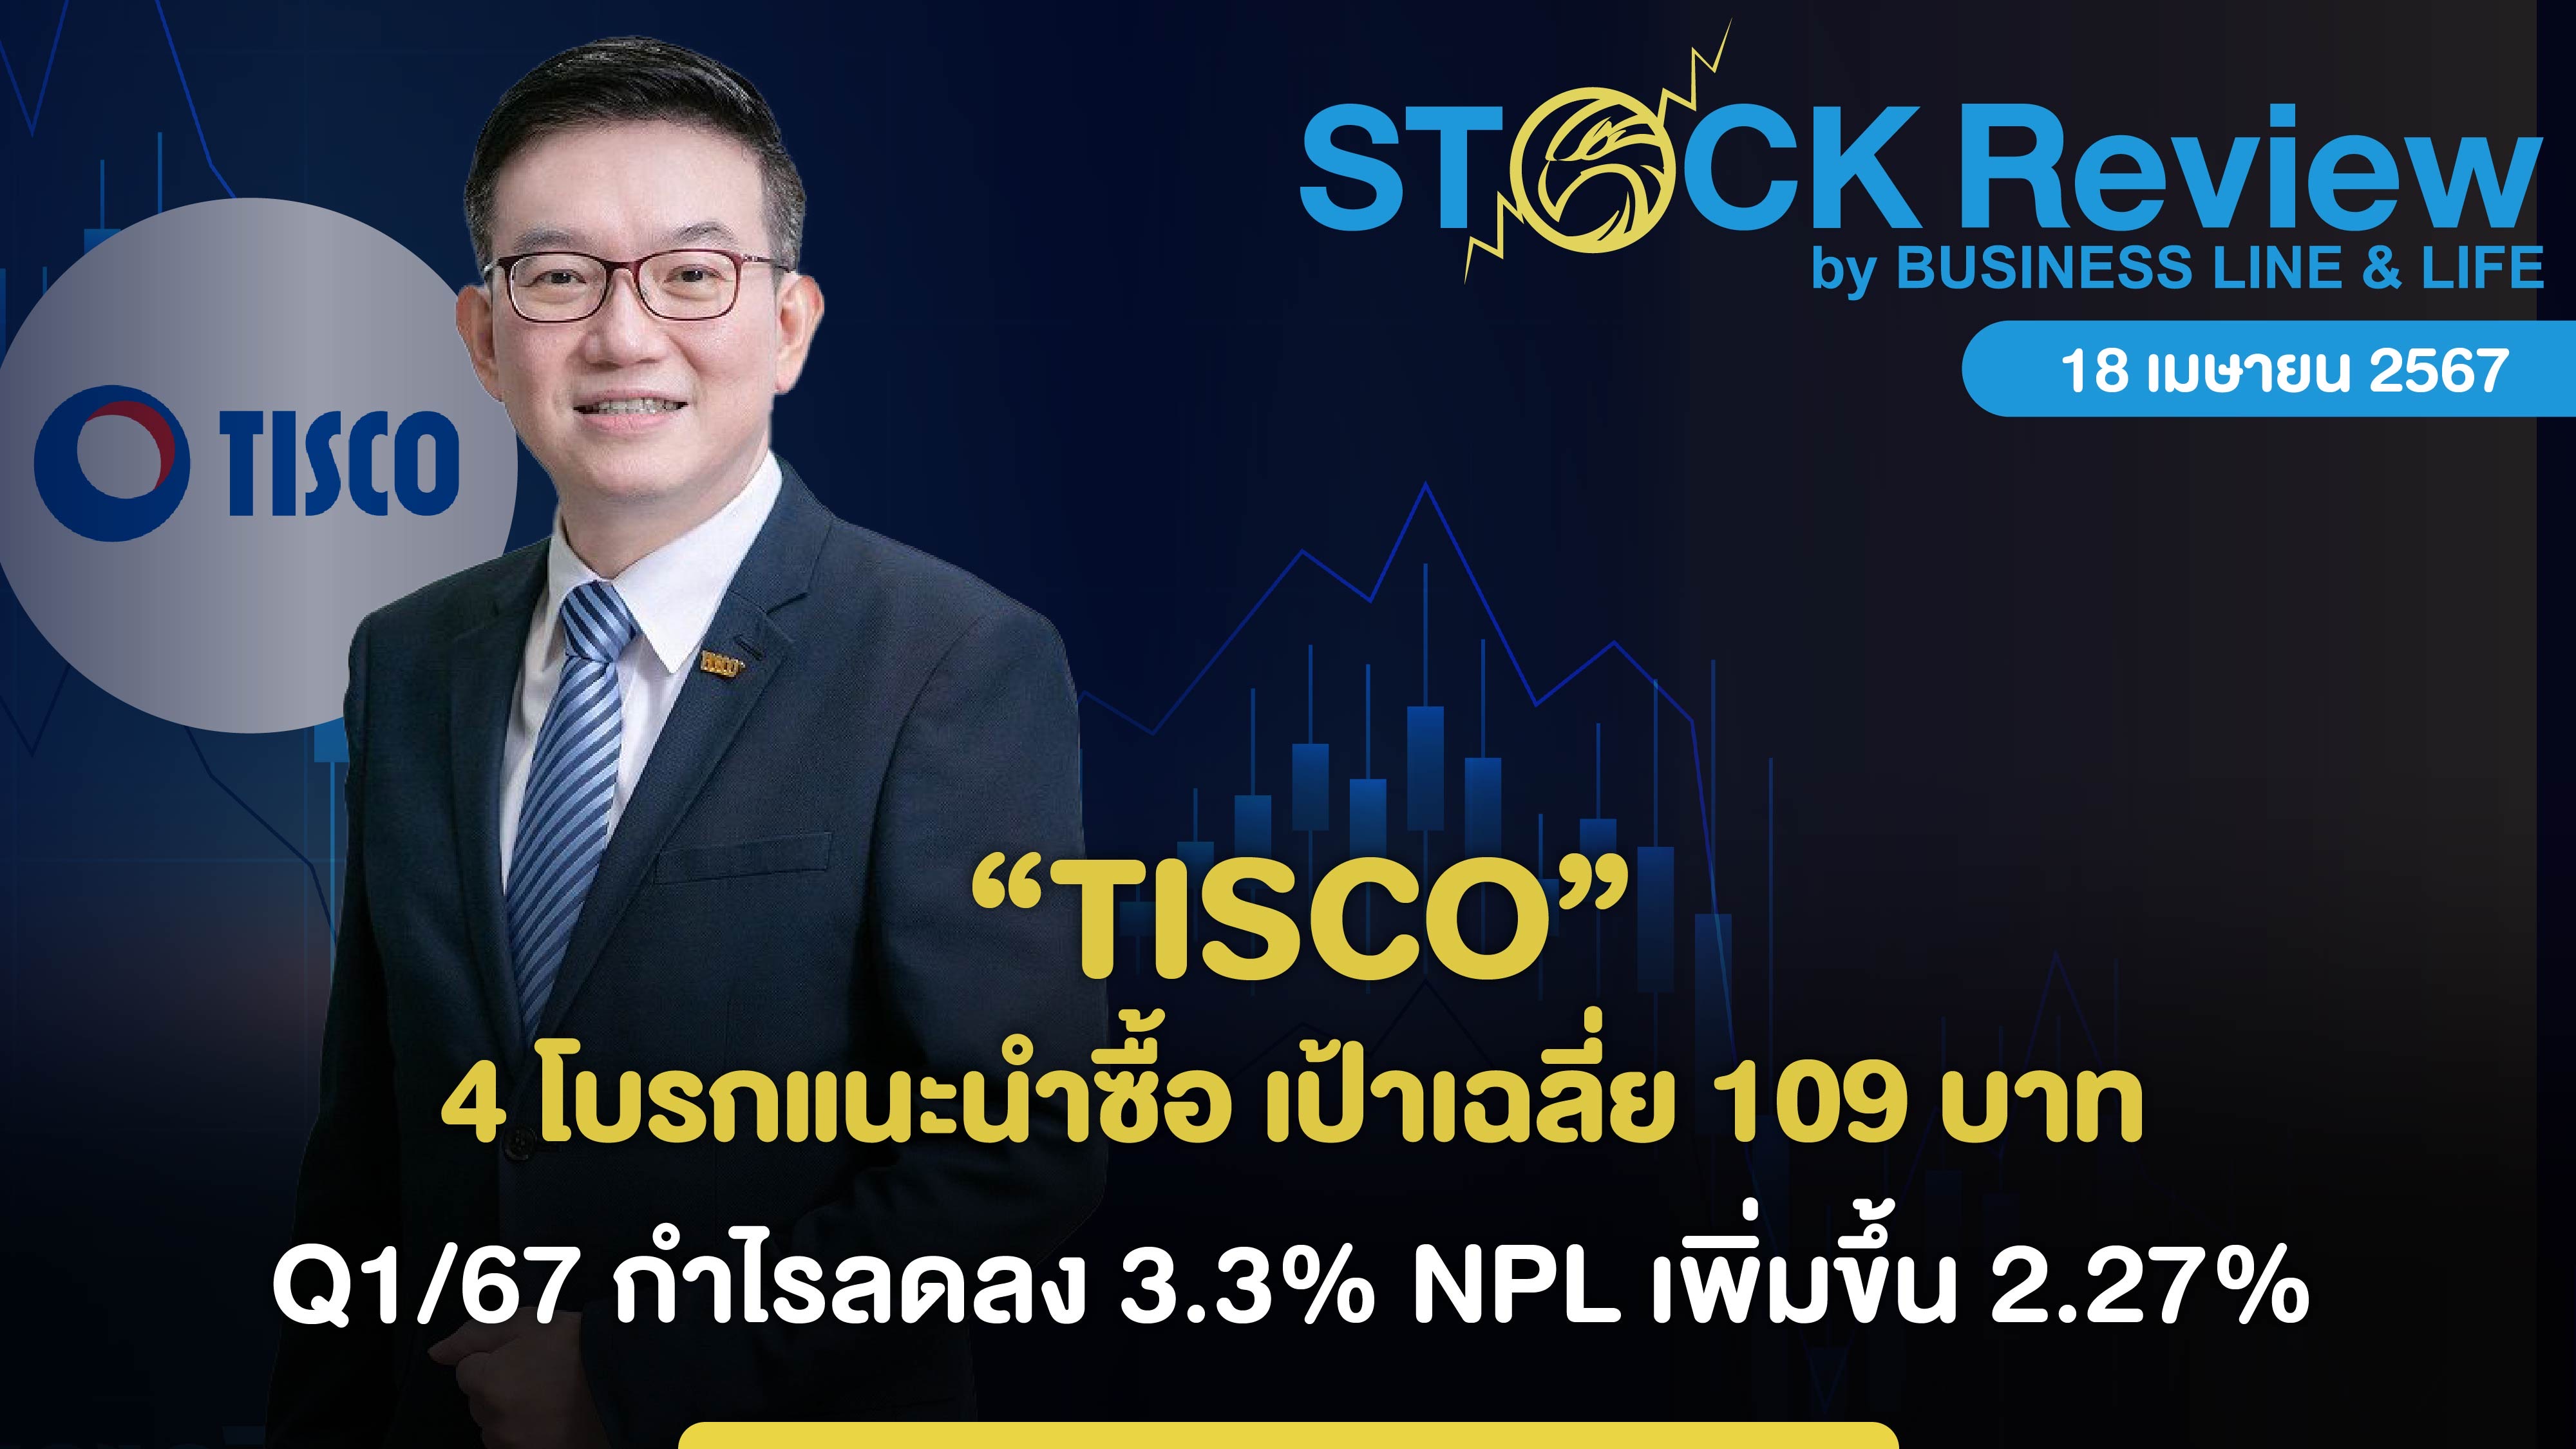 TISCO 4 โบรกแนะนำซื้อ เป้าเฉลี่ย 109 บาท Q1/67 กำไรลดลง 3.3%